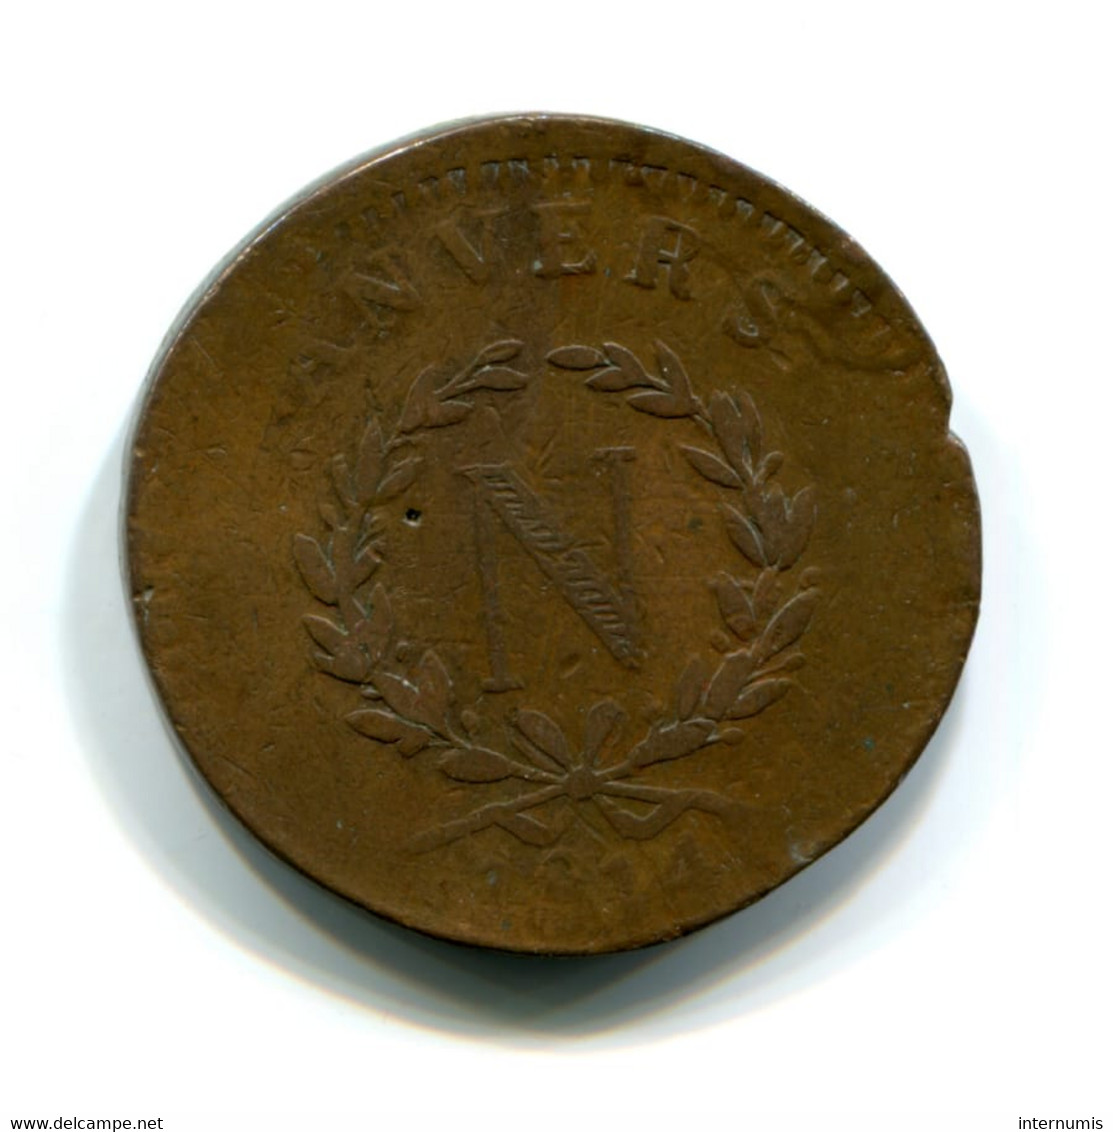 Belgique / Belgium, 10 Centimes, 1814, Siege D'Anvers- Napoléon,Bronze, WOLSCHOT,TB(VF),KM#5,F.130A/2,G.191a,COL.2b - 1814 Asedio De Amberes